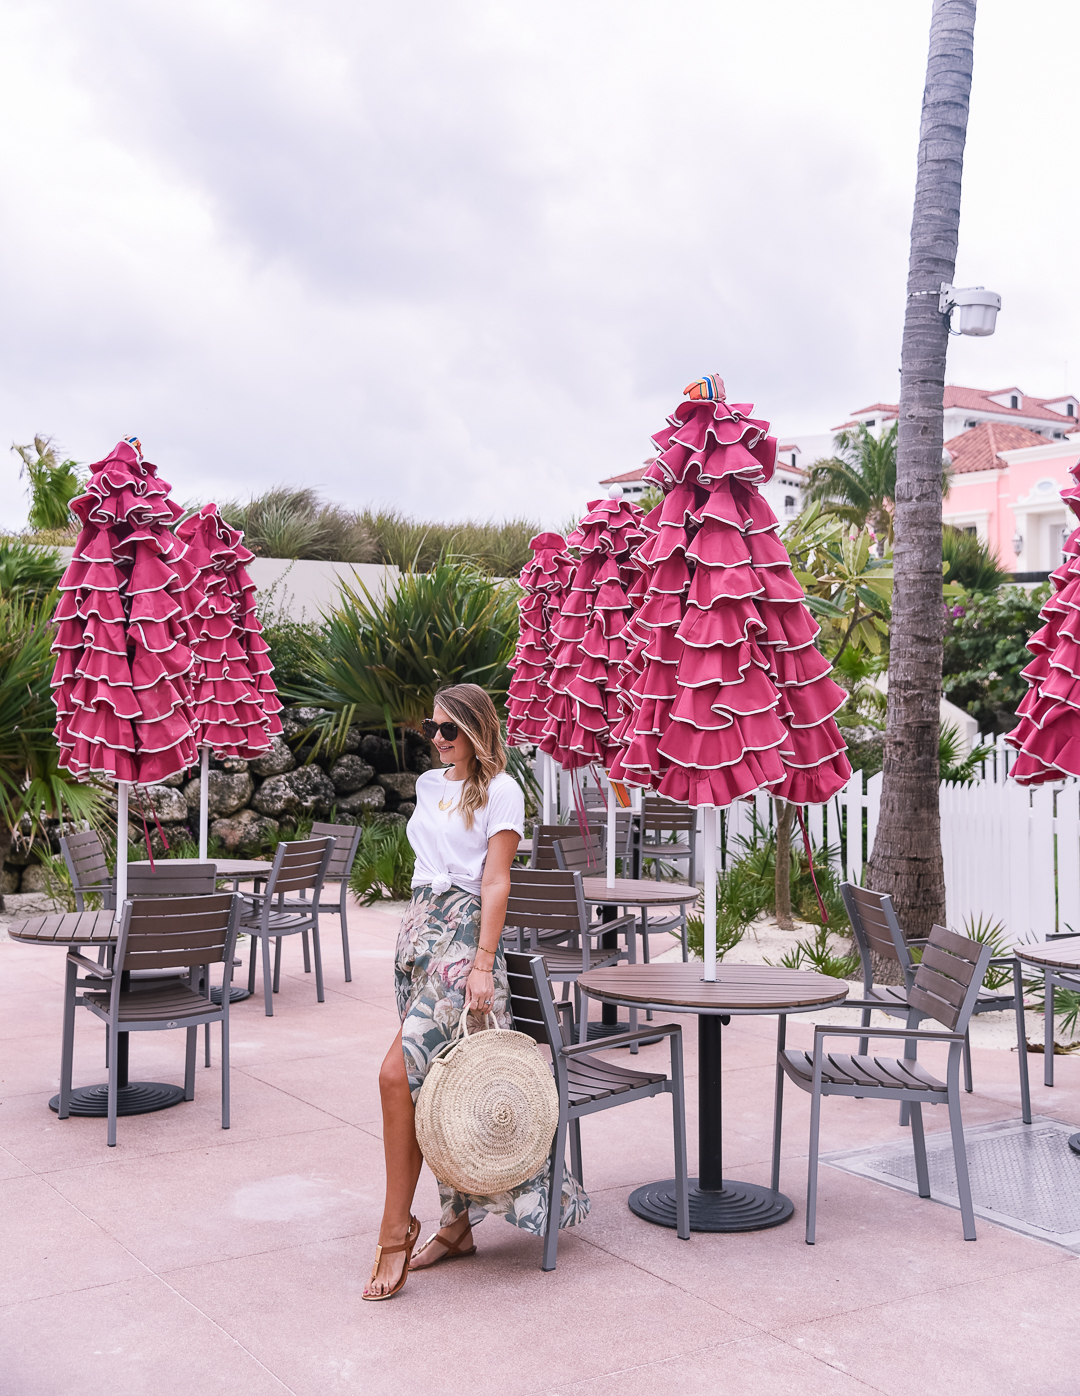 pink flamingo umbrellas at baha mar - baha mar resort review in the bahamas by popular Chicago travel blogger Visions of Vogue